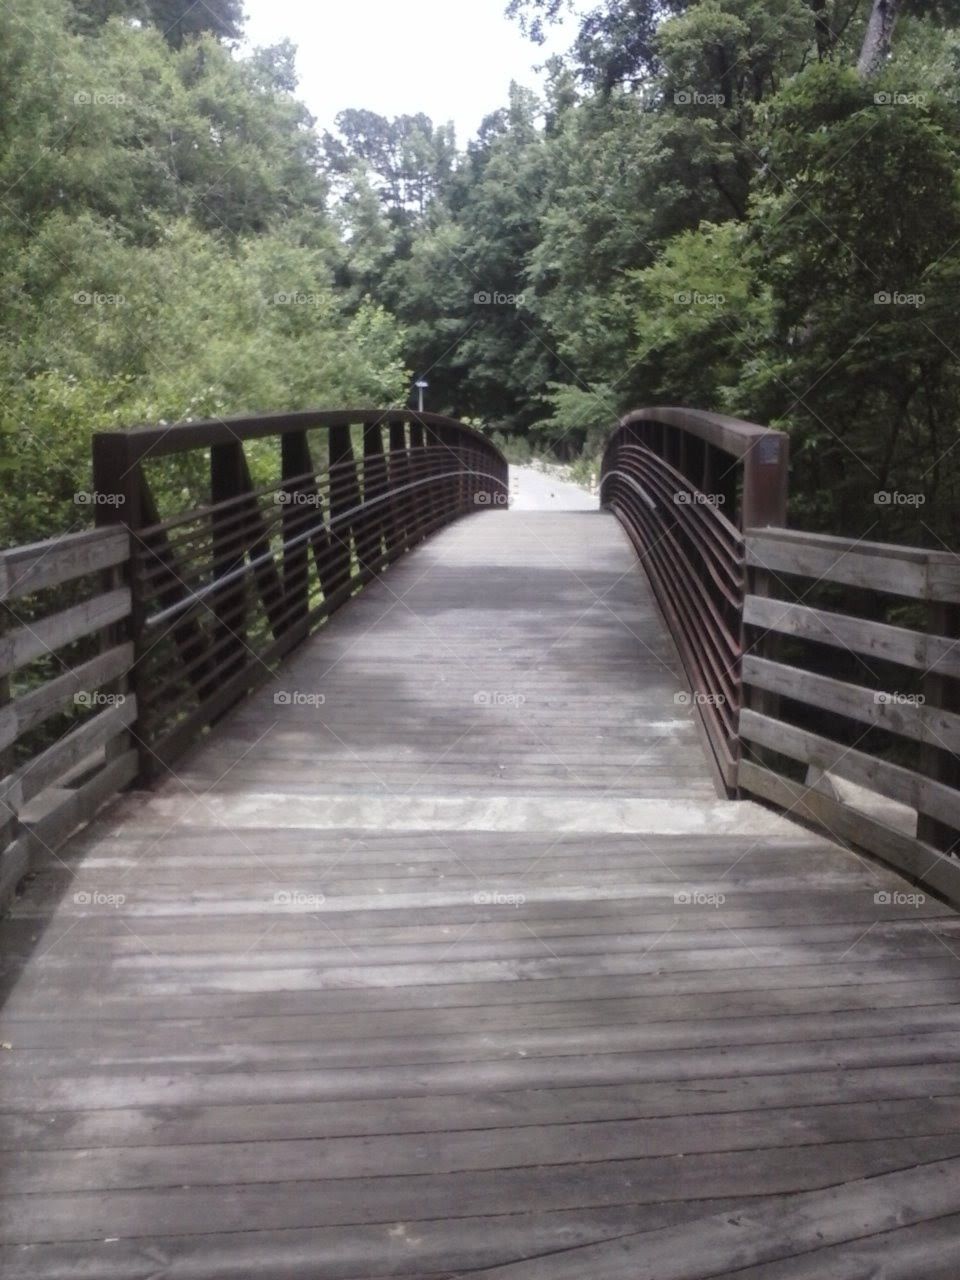 ~Bridge To The Unknown~